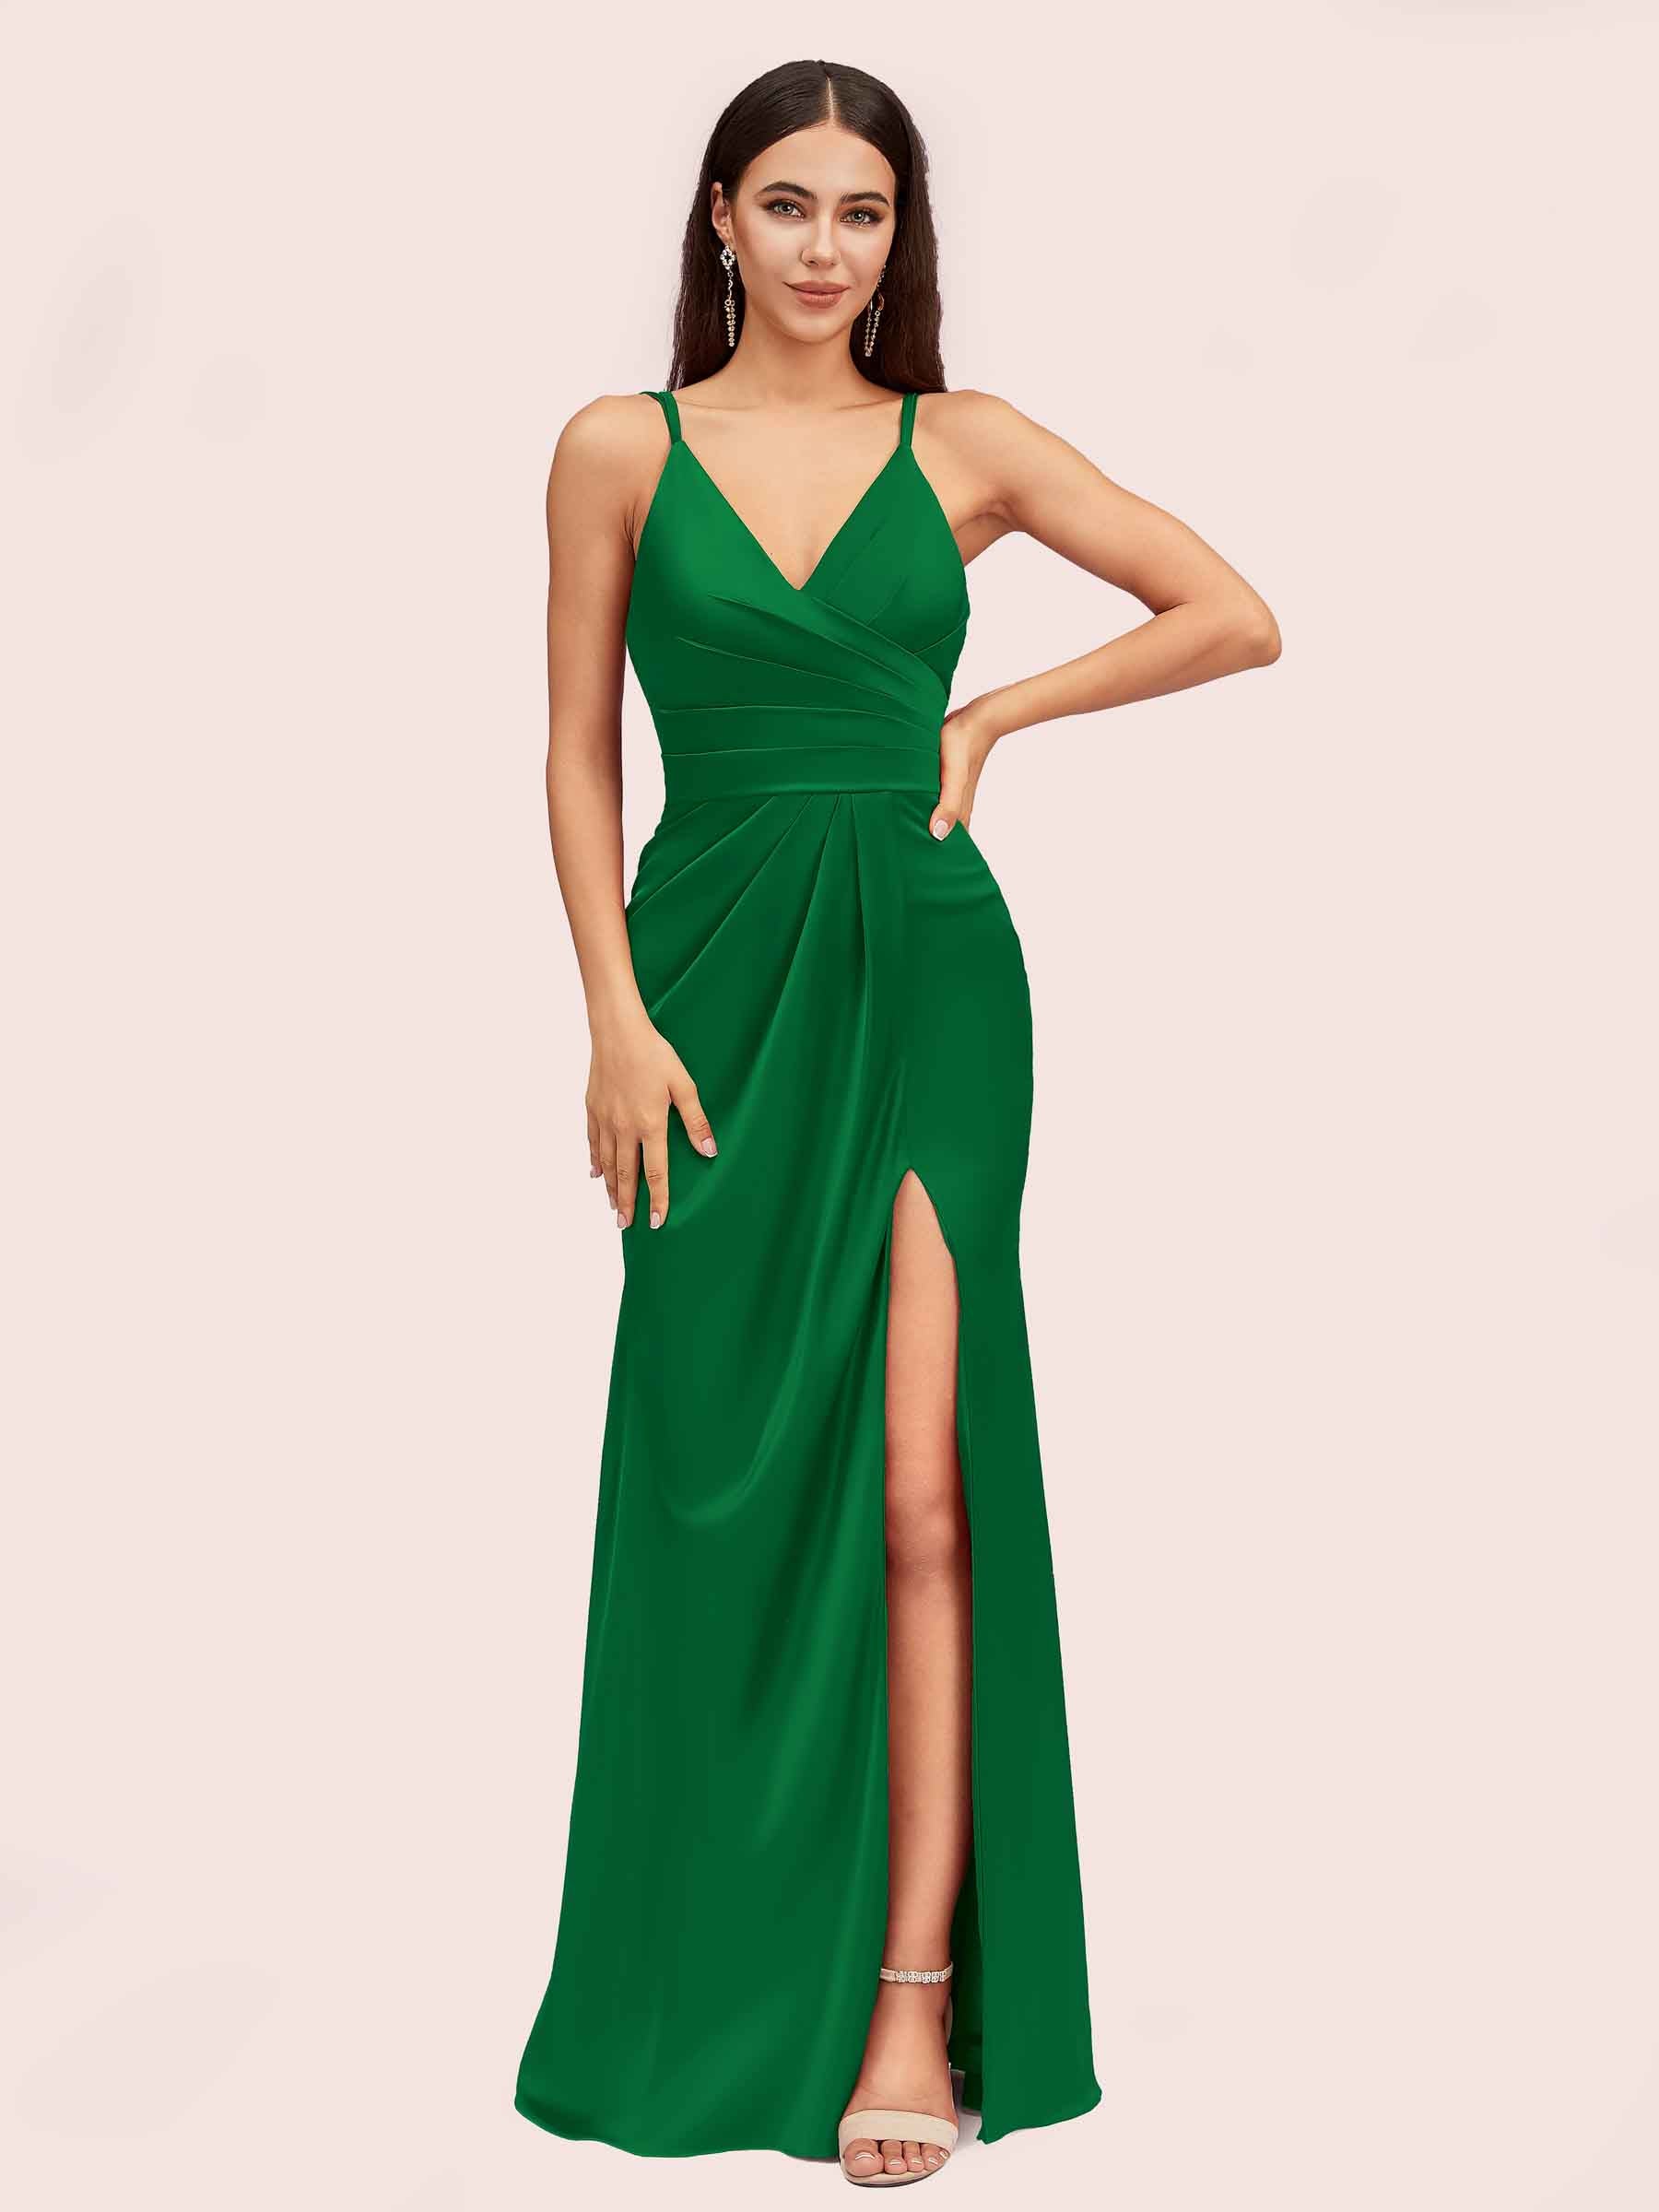 Green Satin Bridesmaid Dresses 7 Days Money Back Guarantee Cetims 8774